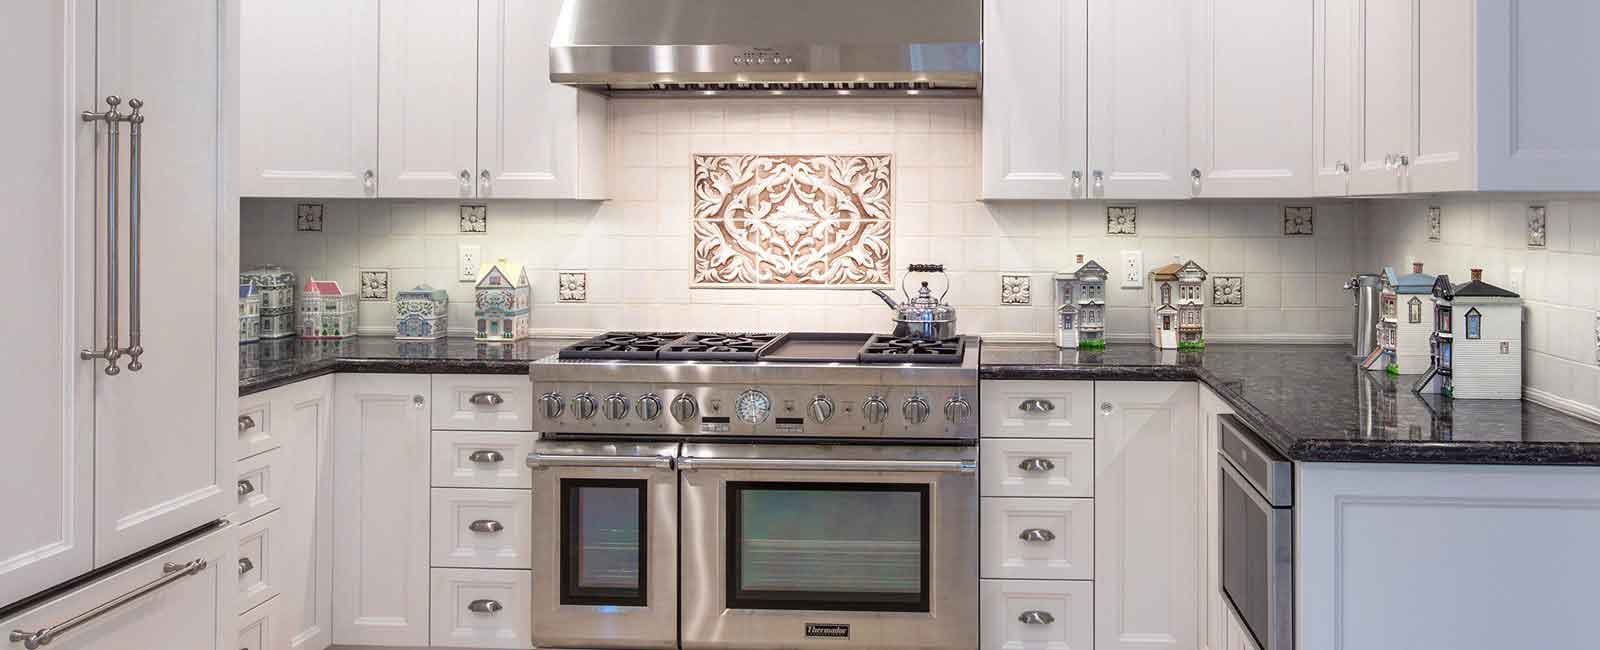 https://www.thekitchenstore.net/wp-content/uploads/2018/04/residential-custom-kitchen-cabinets-in-santa-monica-ca-1600x650.jpg